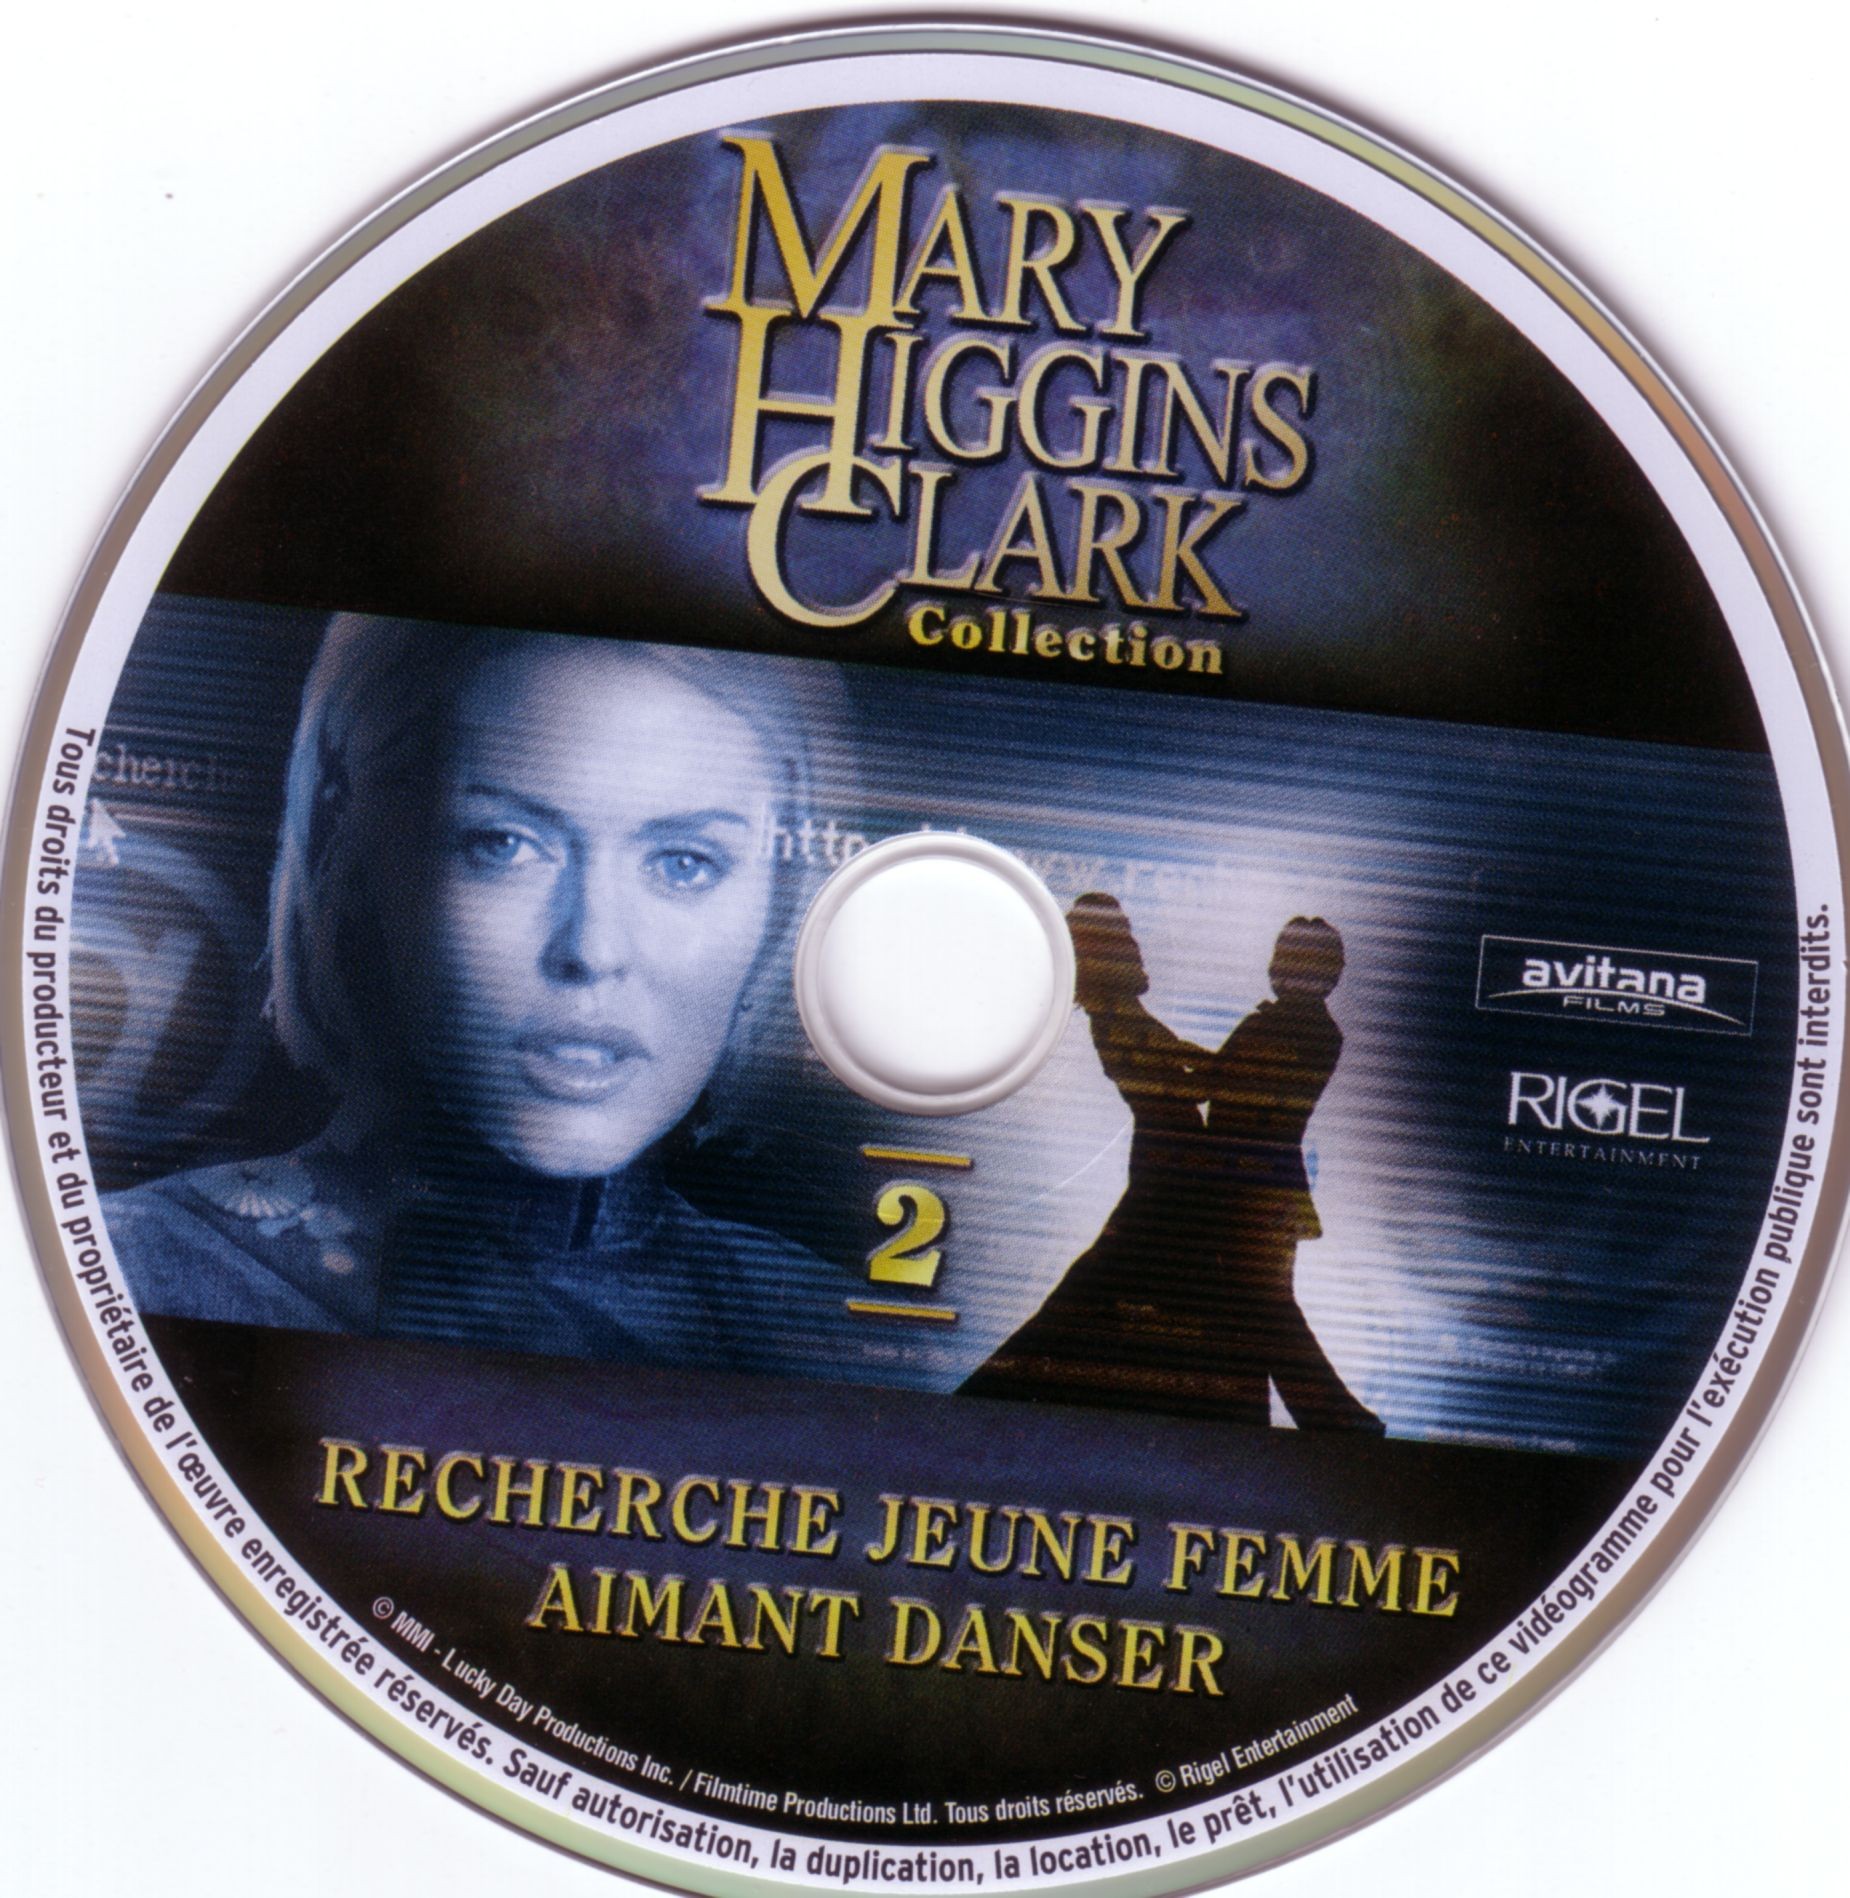 Mary Higgins Clark vol 02 - recherche jeune femme @imant danser